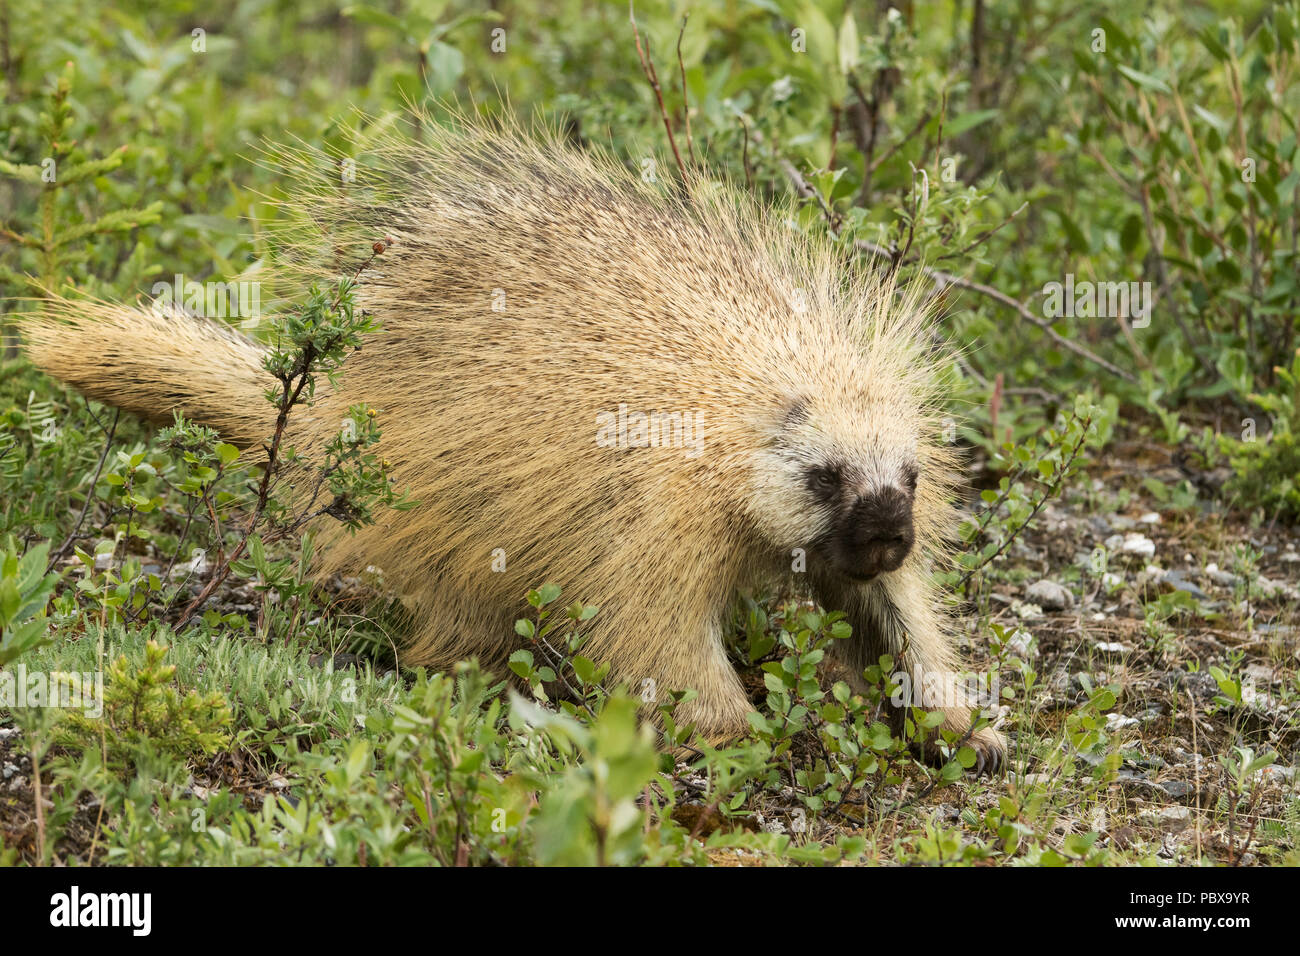 https://c8.alamy.com/comp/PBX9YR/porcupine-quills-denali-national-park-alaska-PBX9YR.jpg